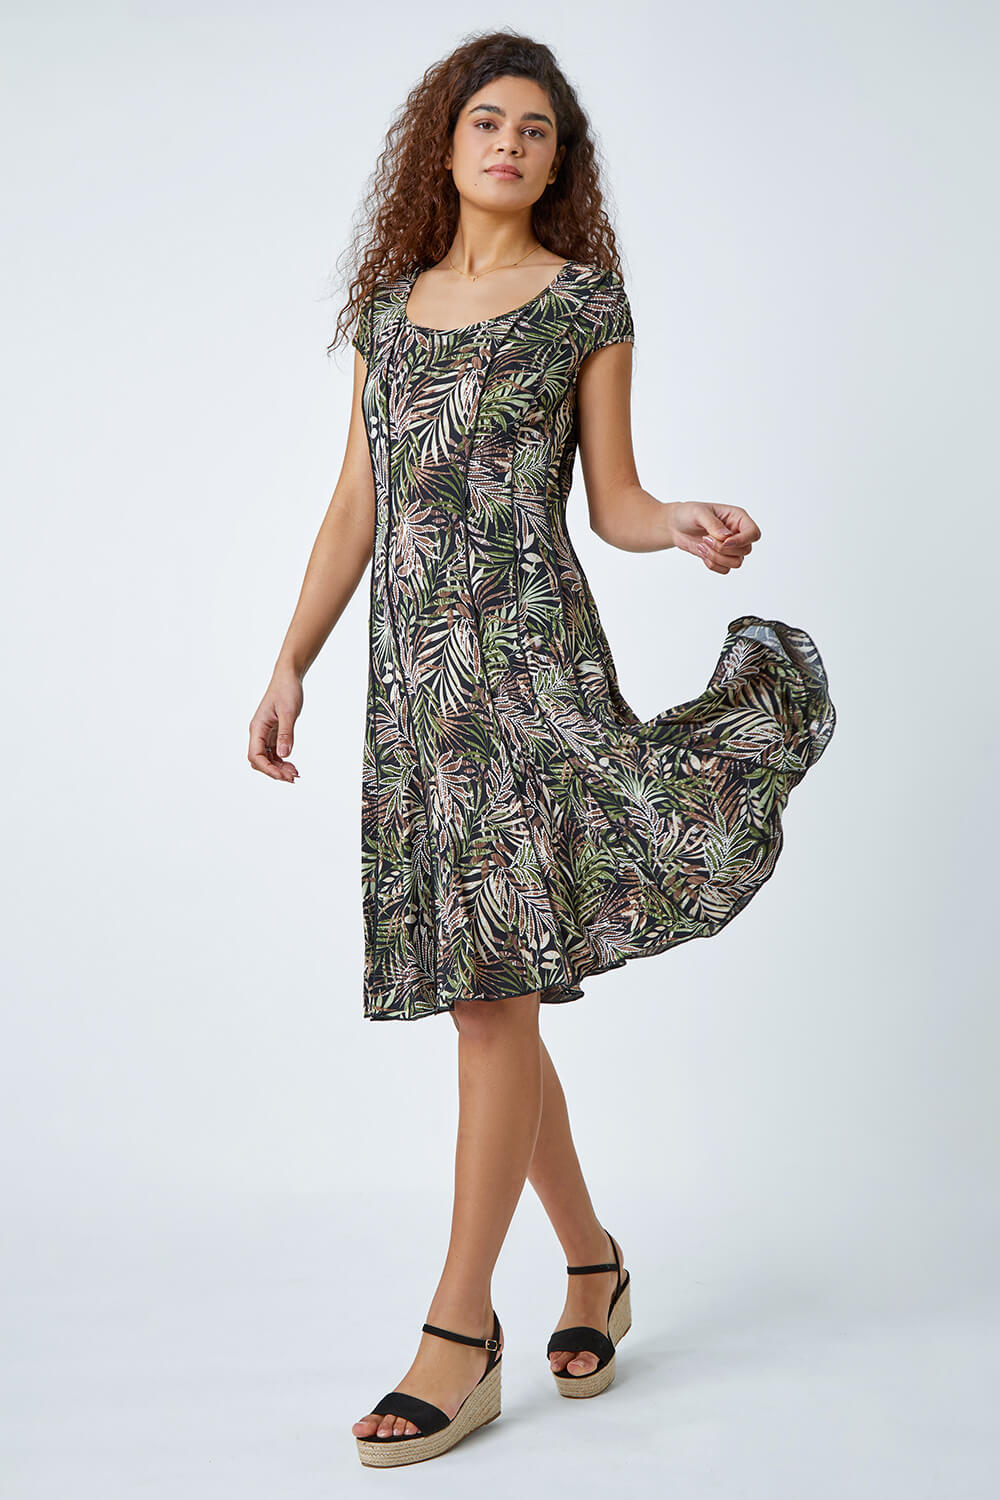 KHAKI Leaf Print Panel Stretch Dress, Image 2 of 5